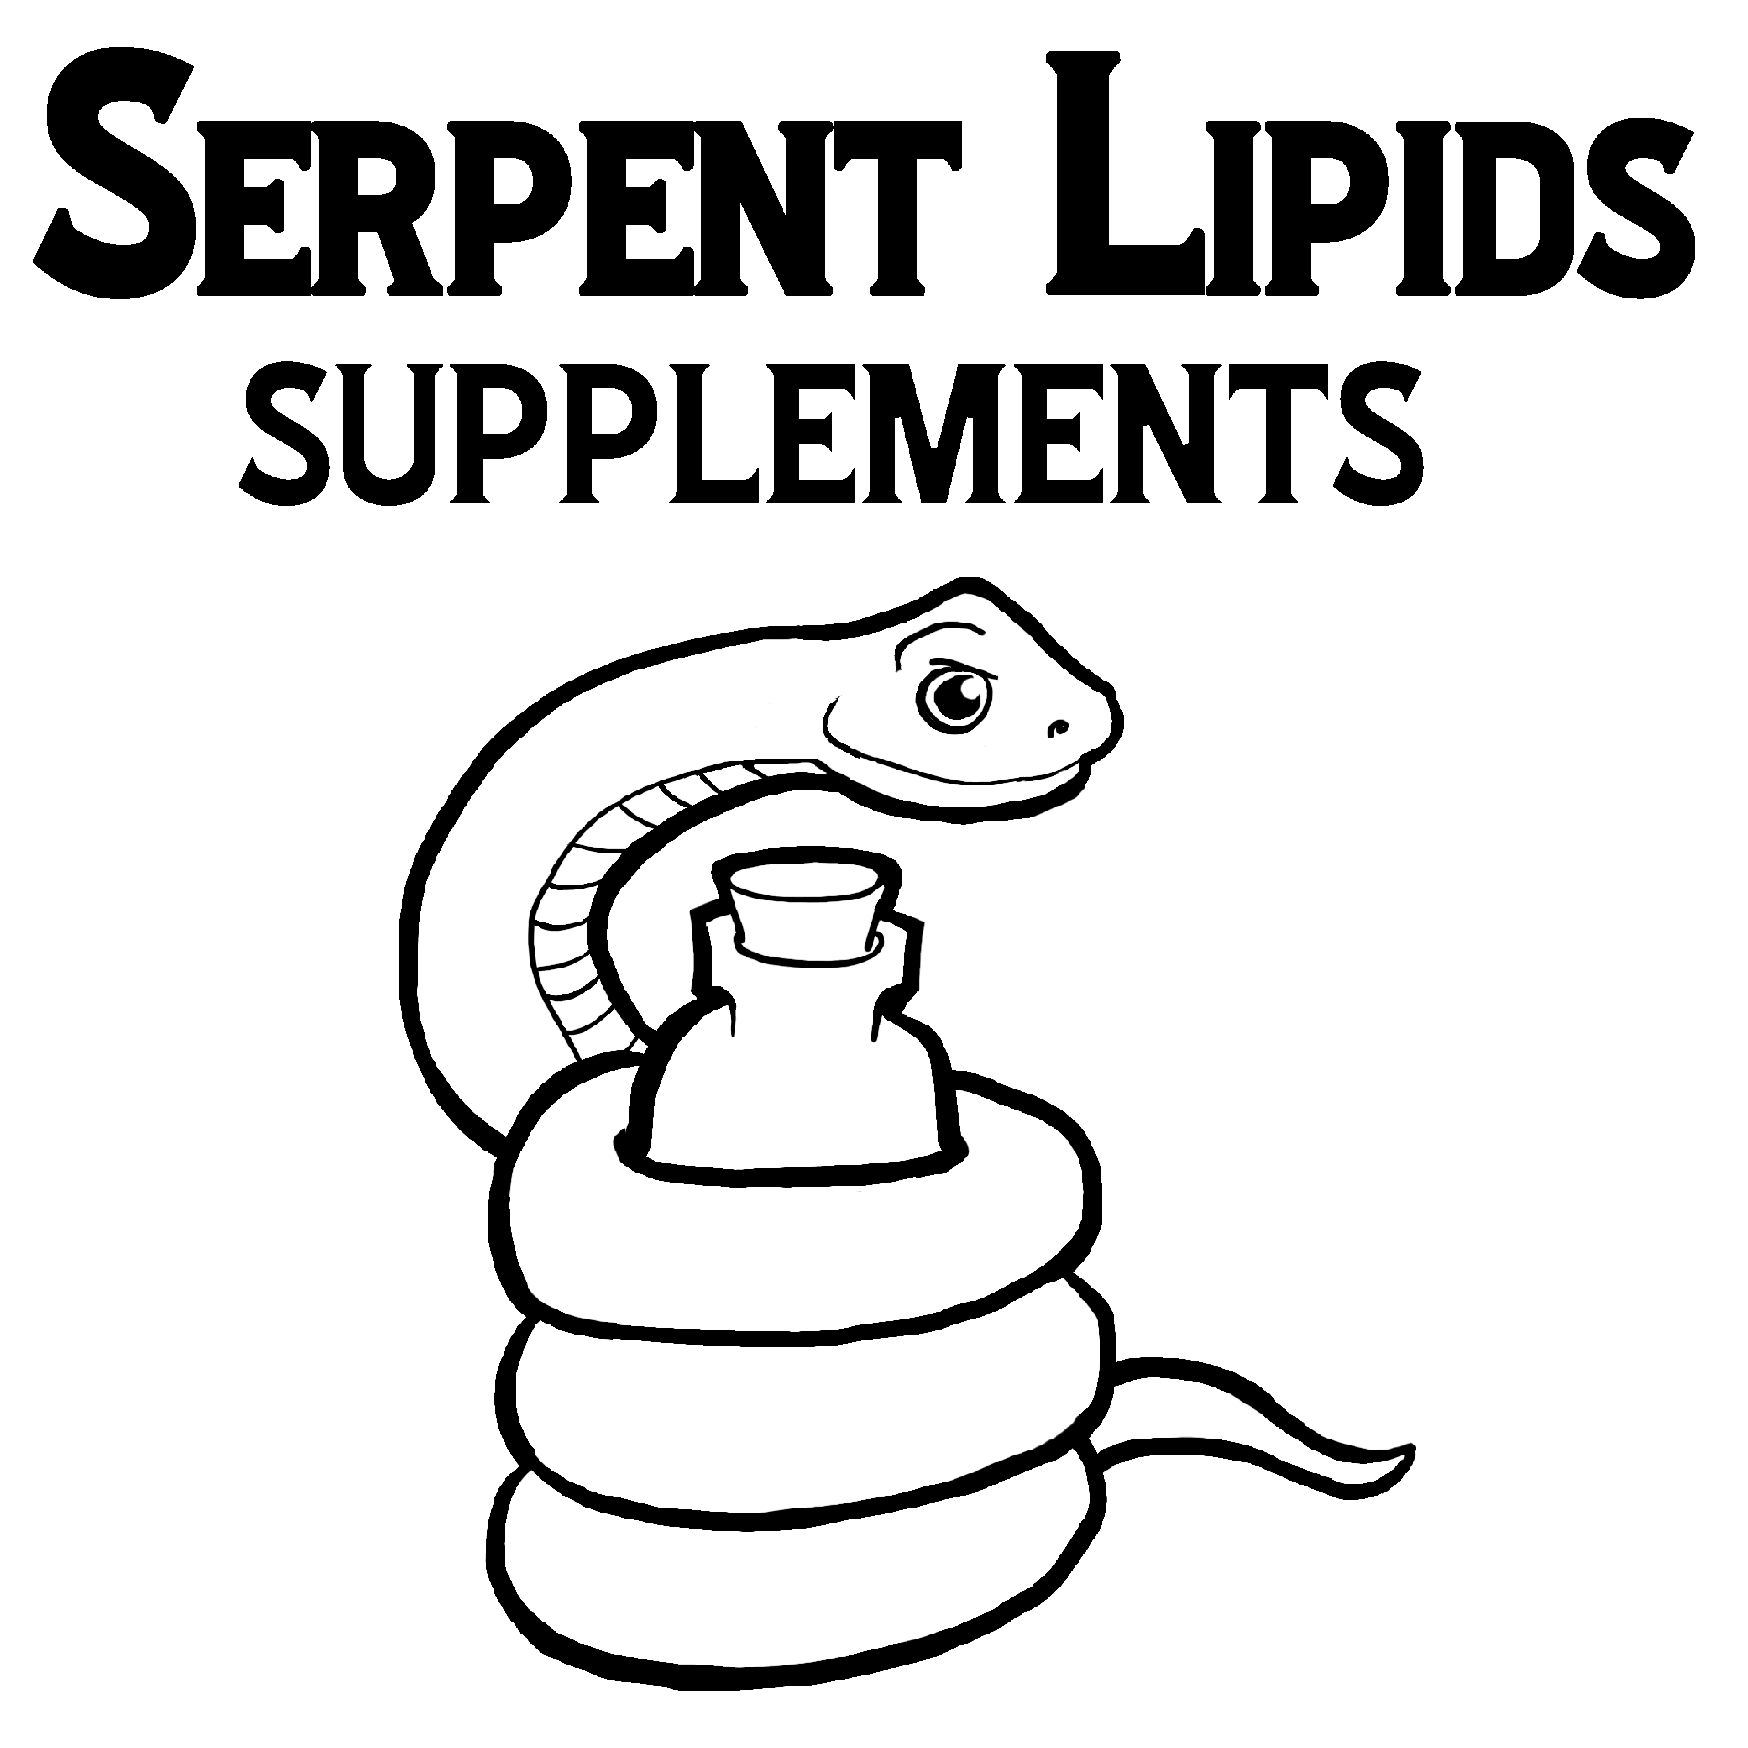 Serpent Lipids Supplements